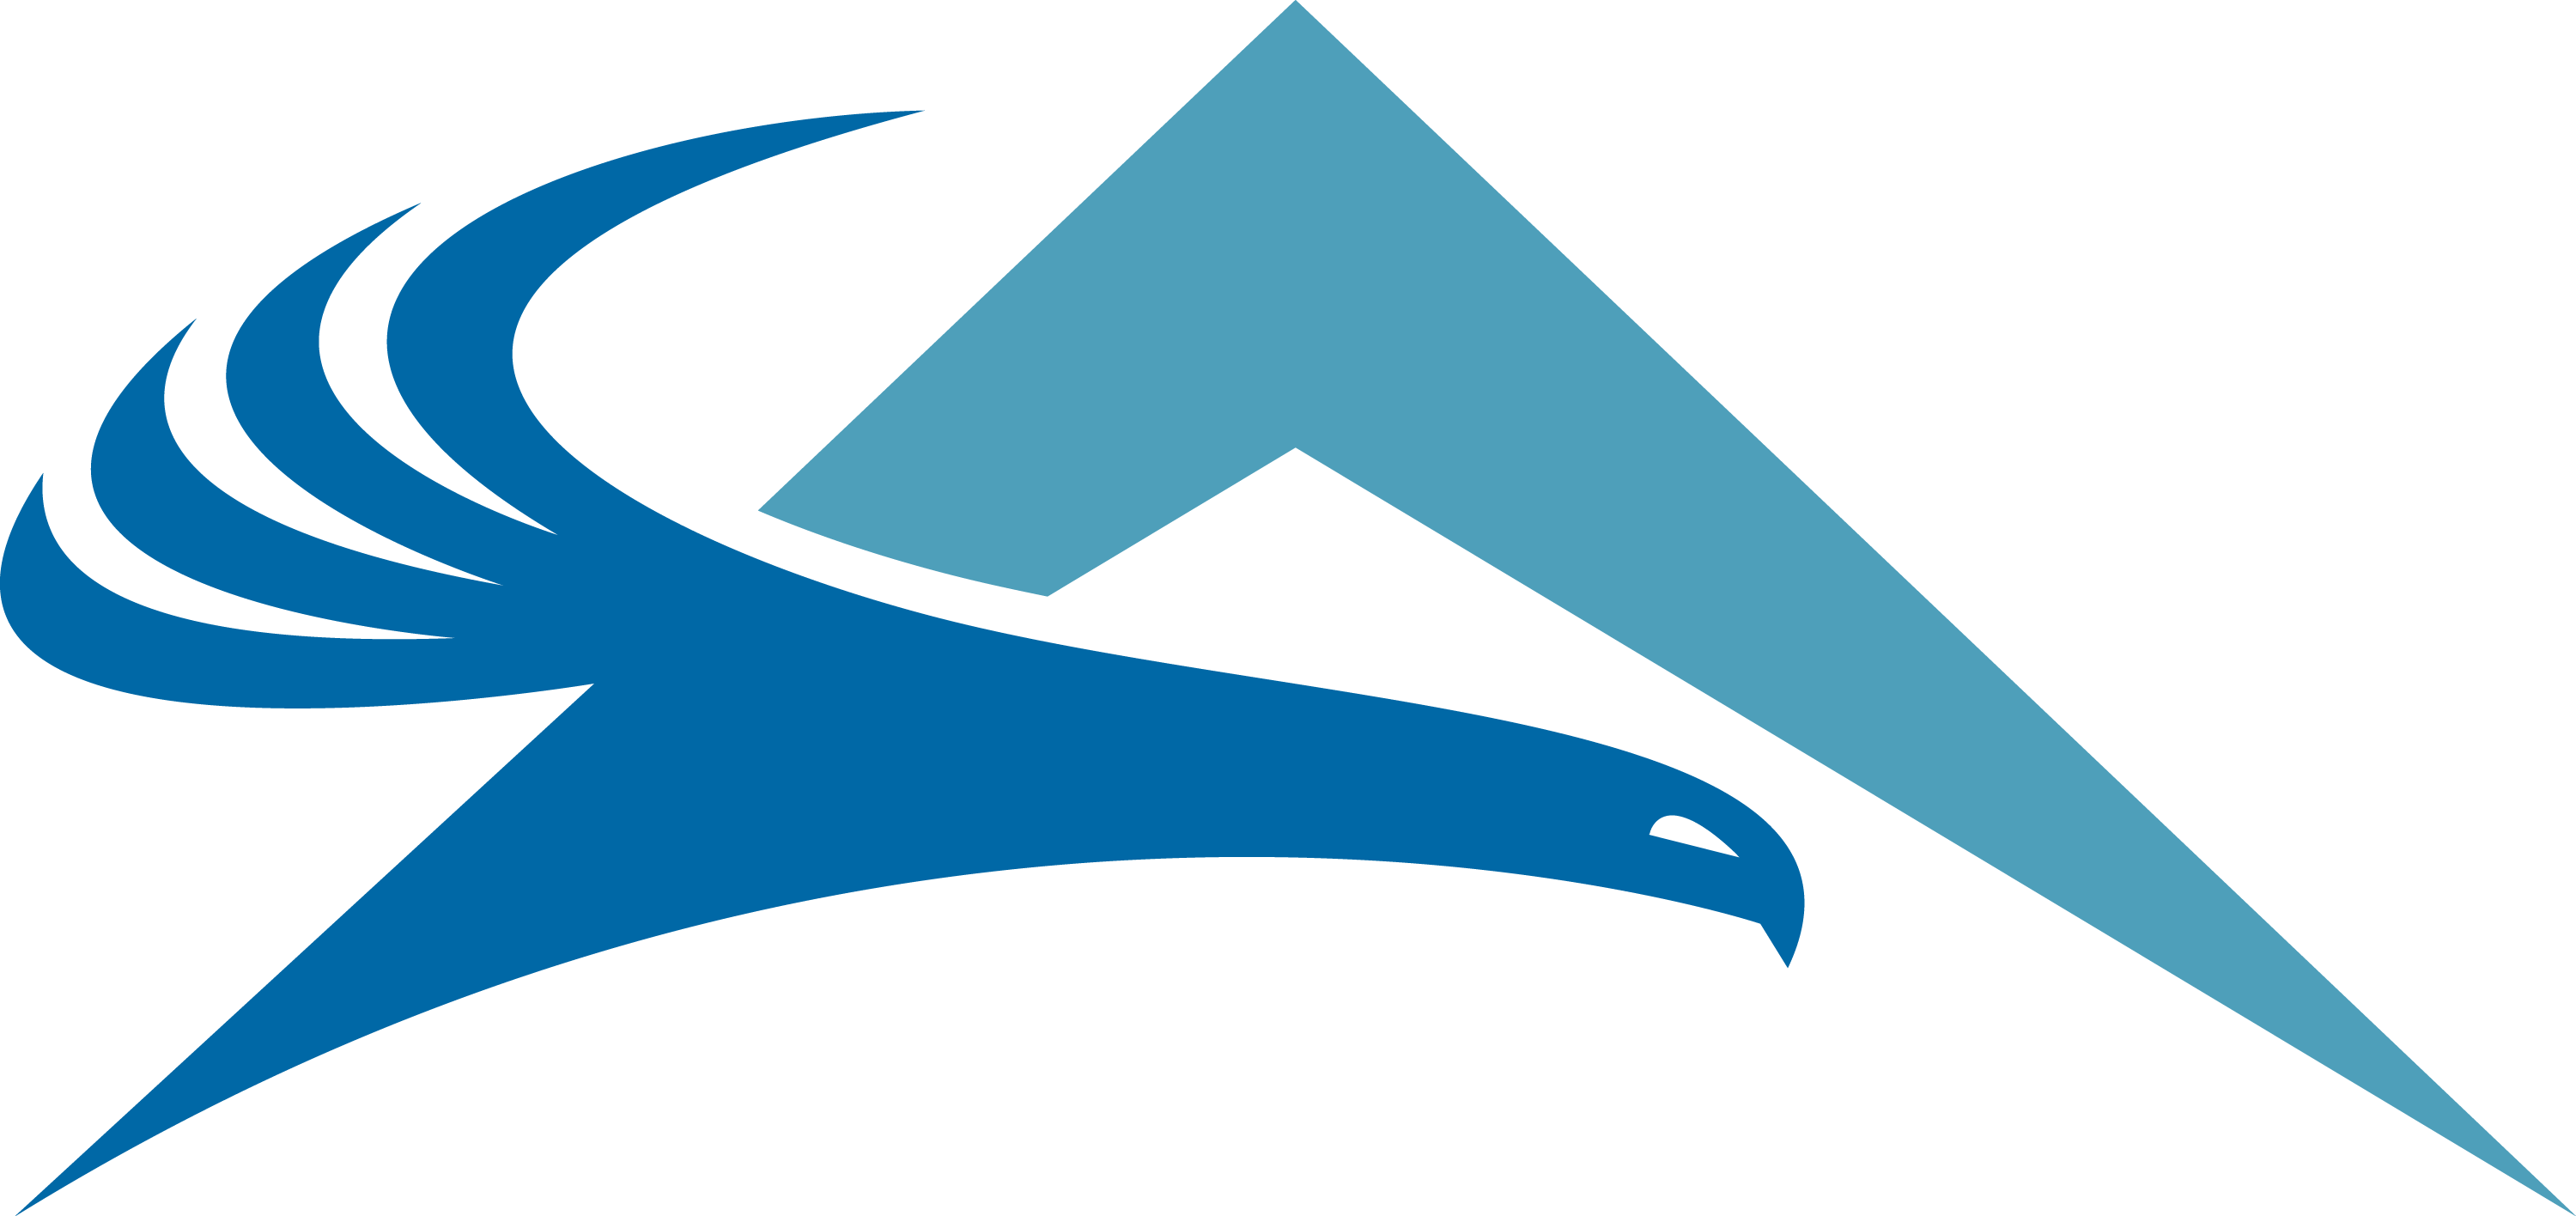 Corporate Aircraft Logo - Atlantic Aviation Kit and Company Assets